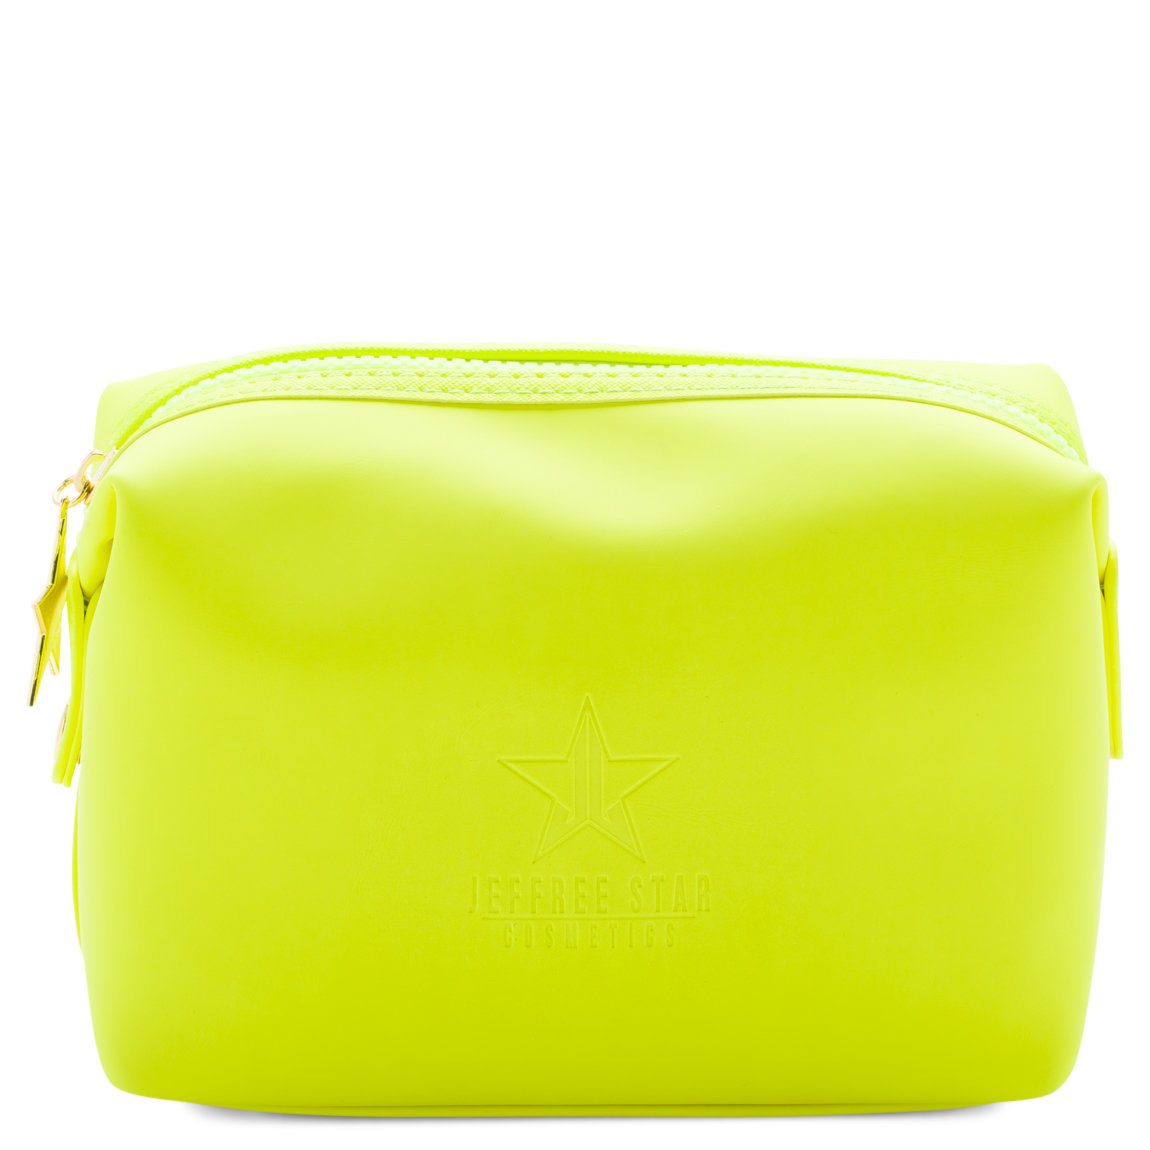 Jeffree Star Cosmetics Neon Velour Makeup Bag | Beautylish